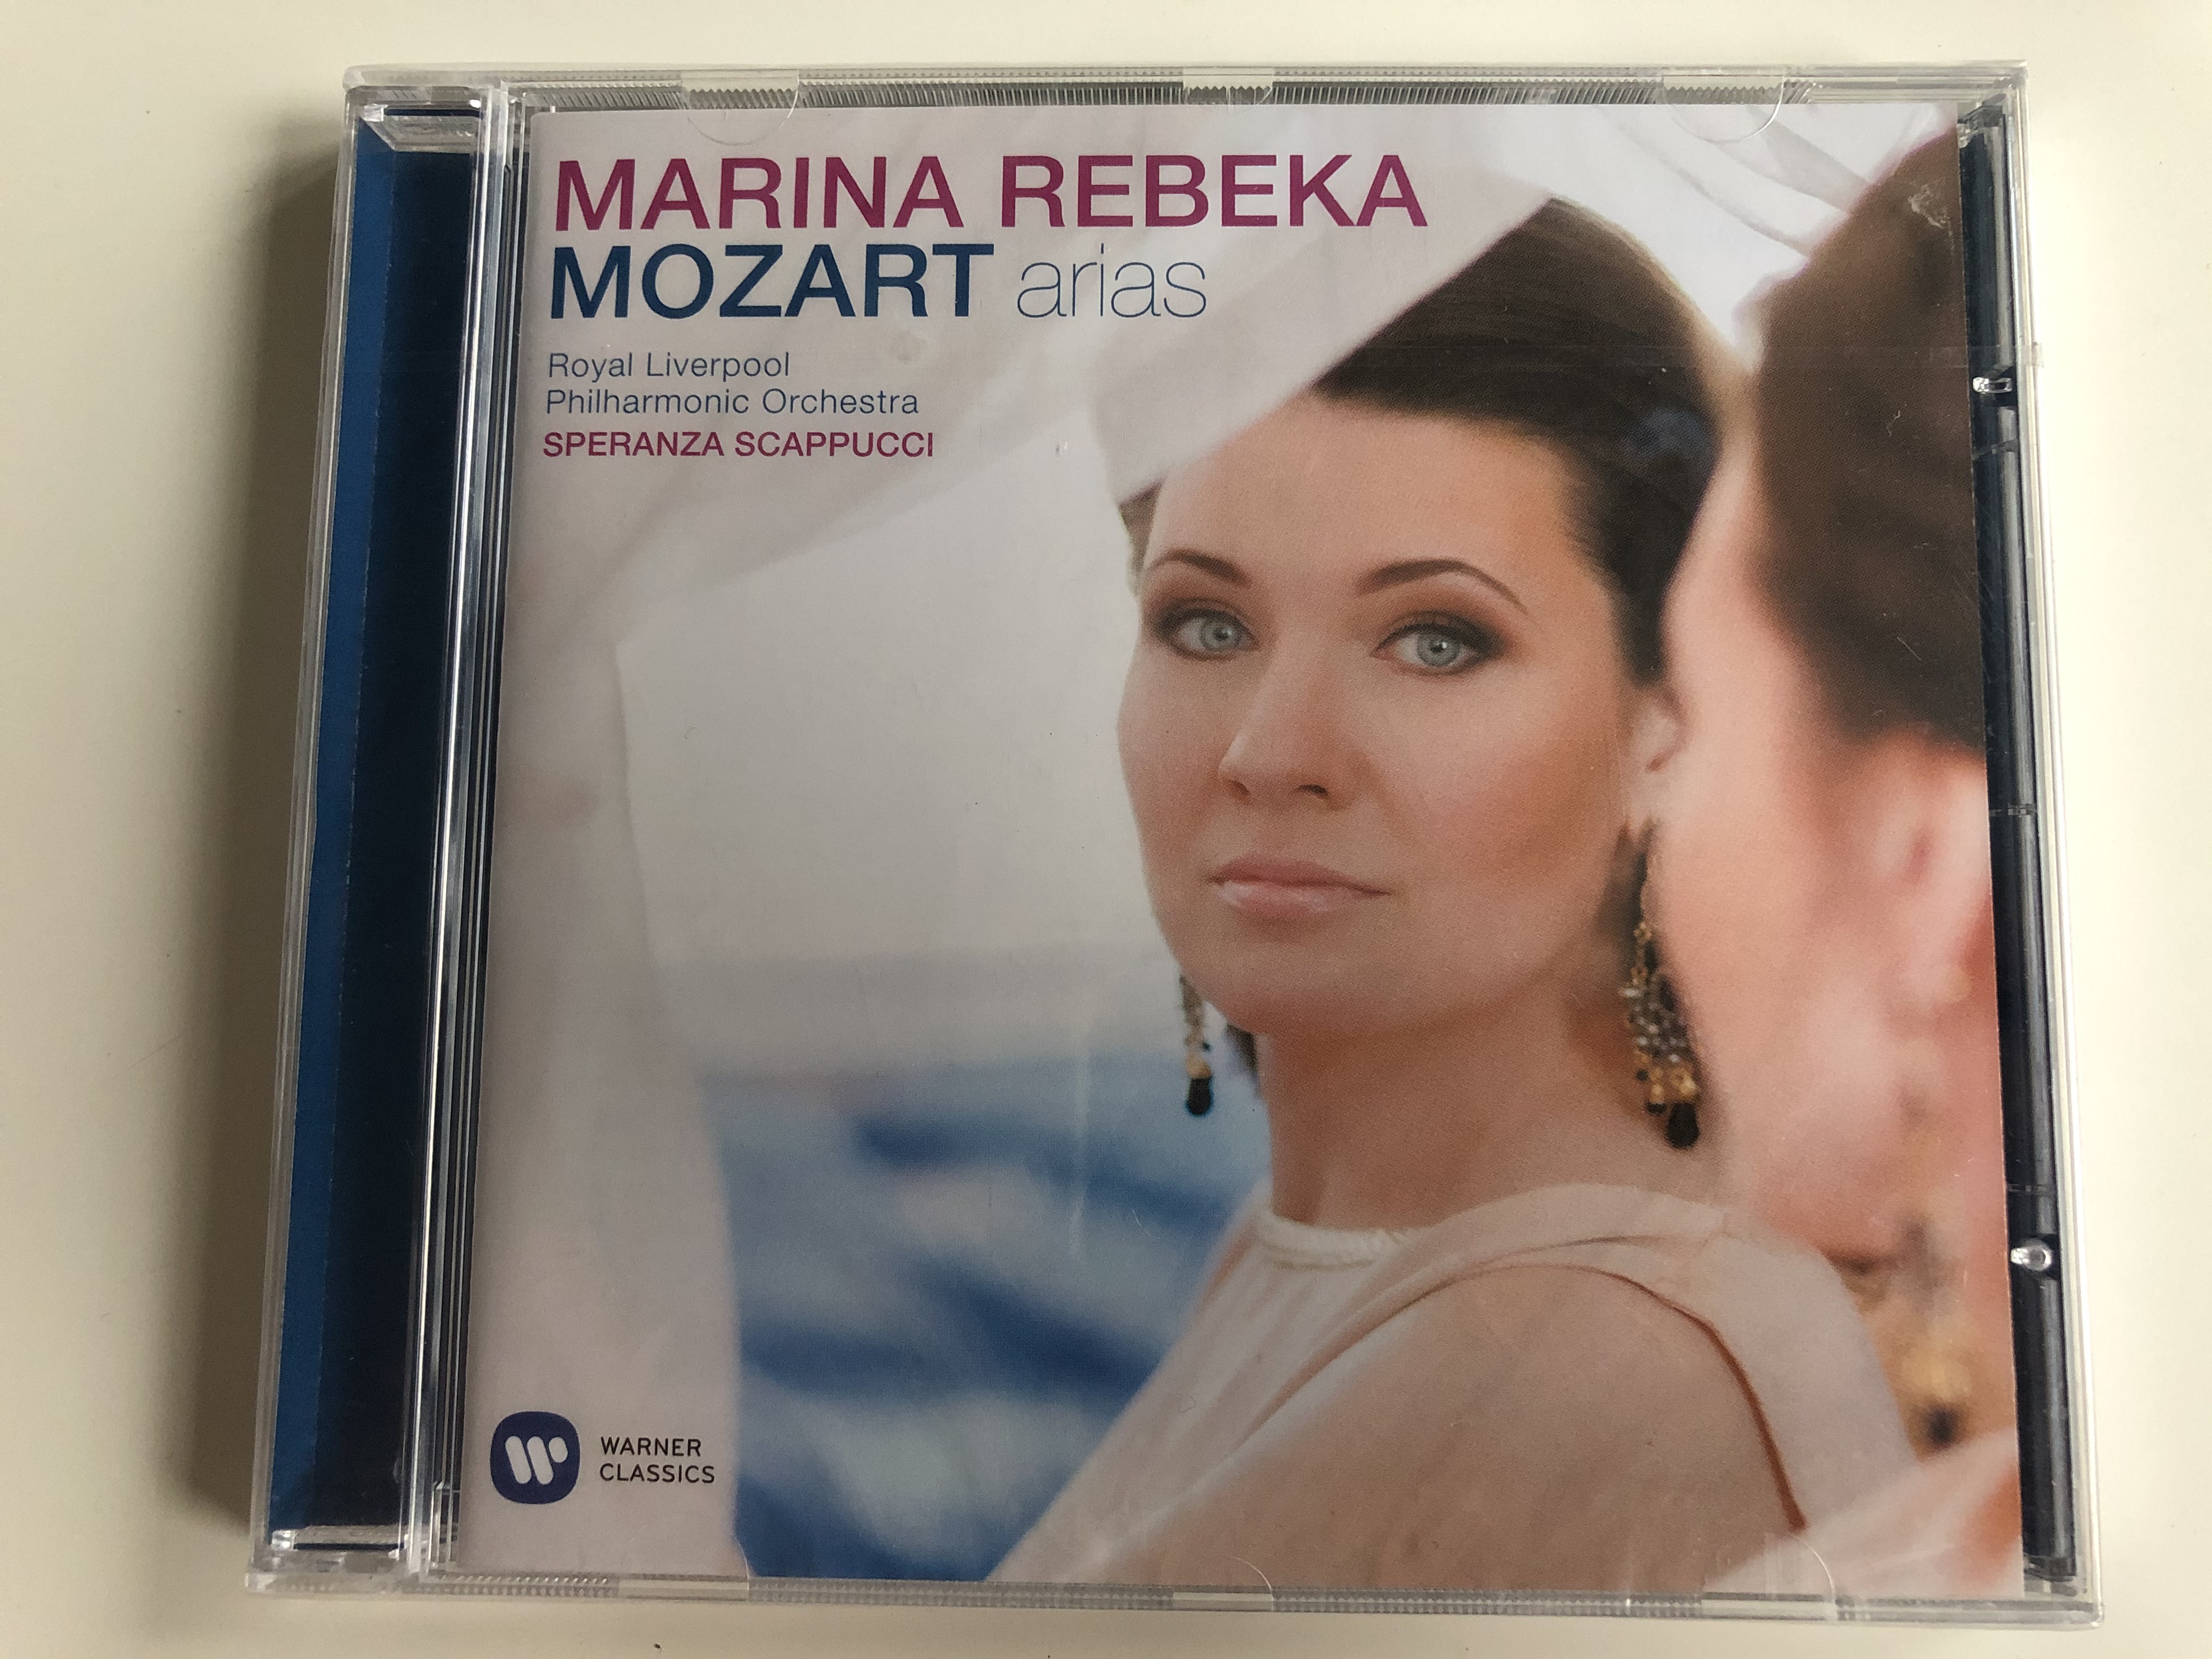 marina-rebeka-mozart-arias-royal-liverpool-philharmonic-orchestra-speranza-scappucci-warner-classics-audio-cd-2013-stereo-5099961549722-1-.jpg